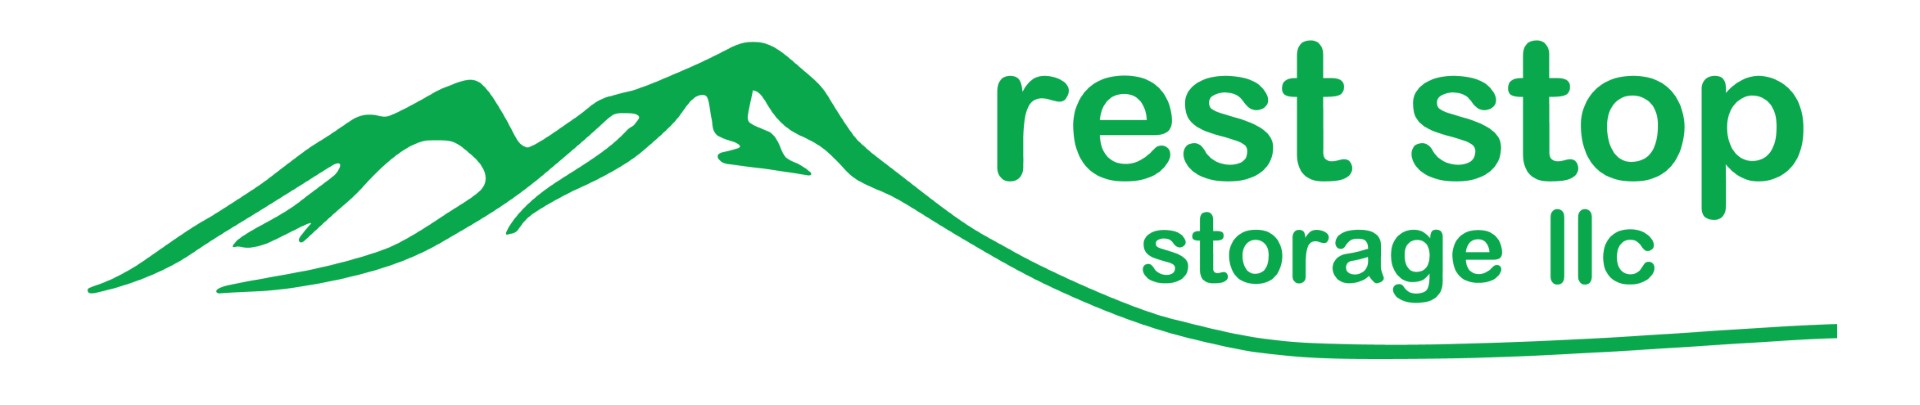 rest stop storage logo